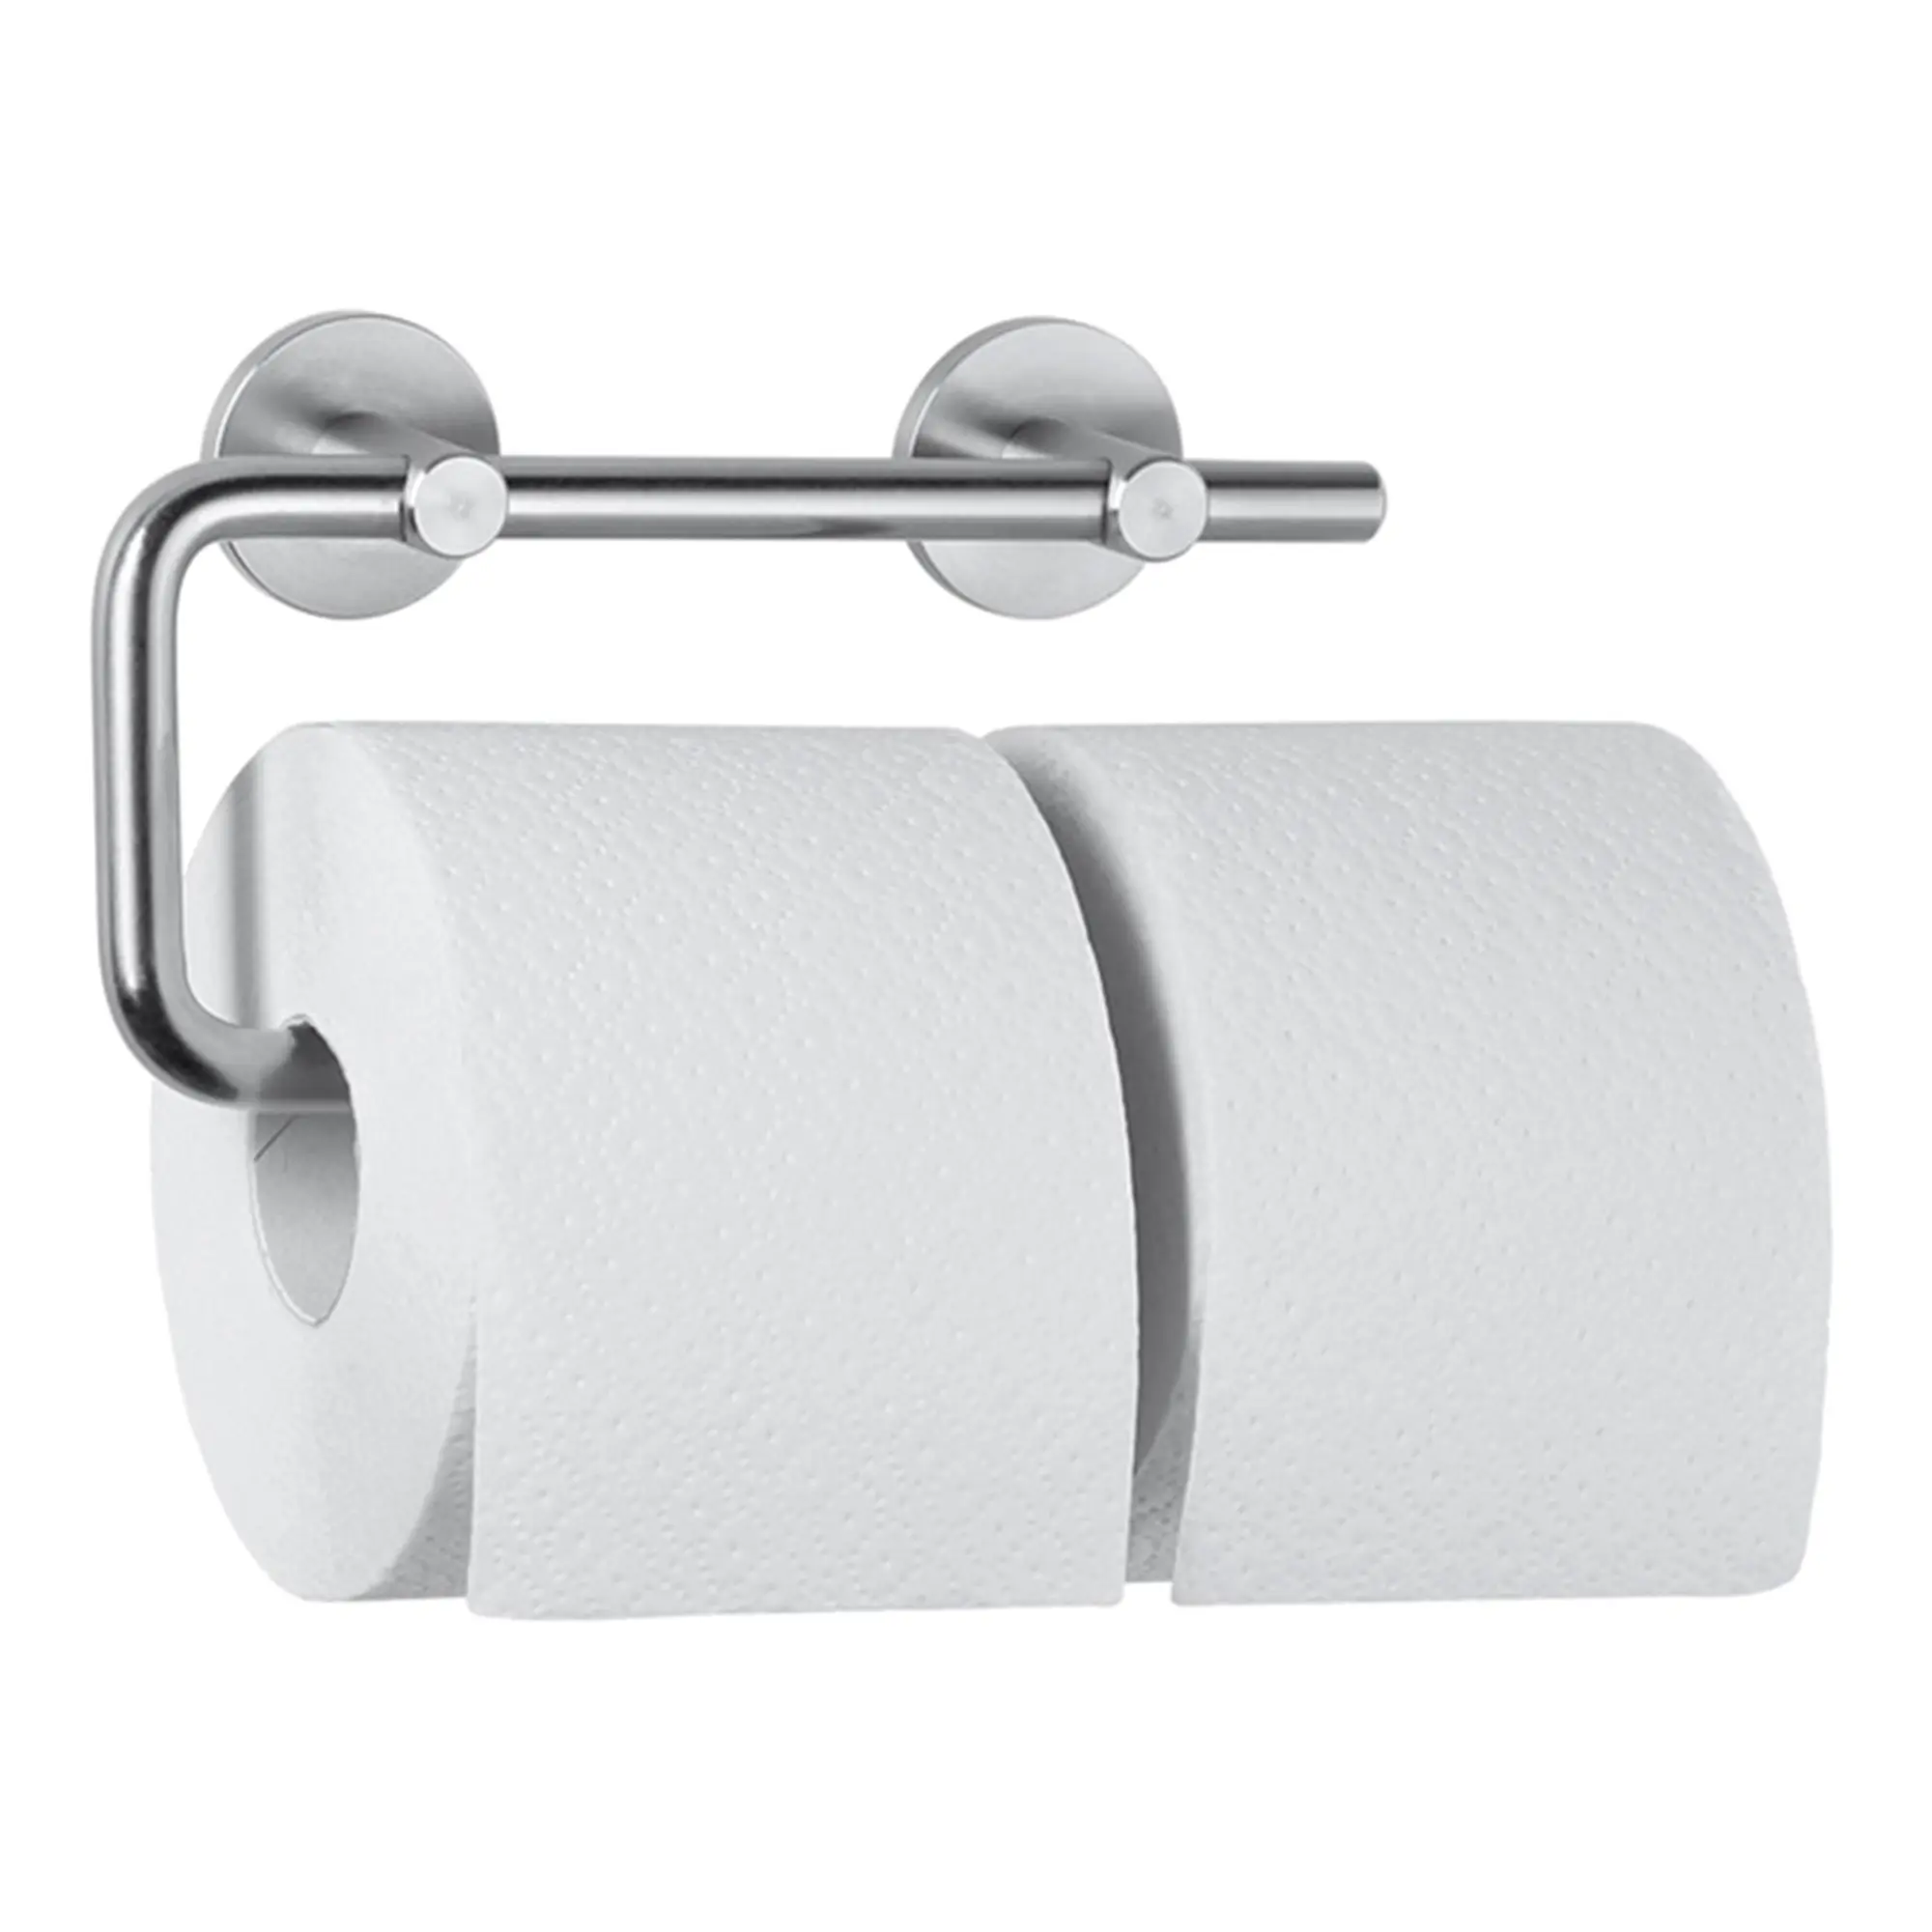 Wagner EWAR AC 252 Zweifach-Toilettenpapierhalter 2 Rollen Edelstahl matt 700252_1